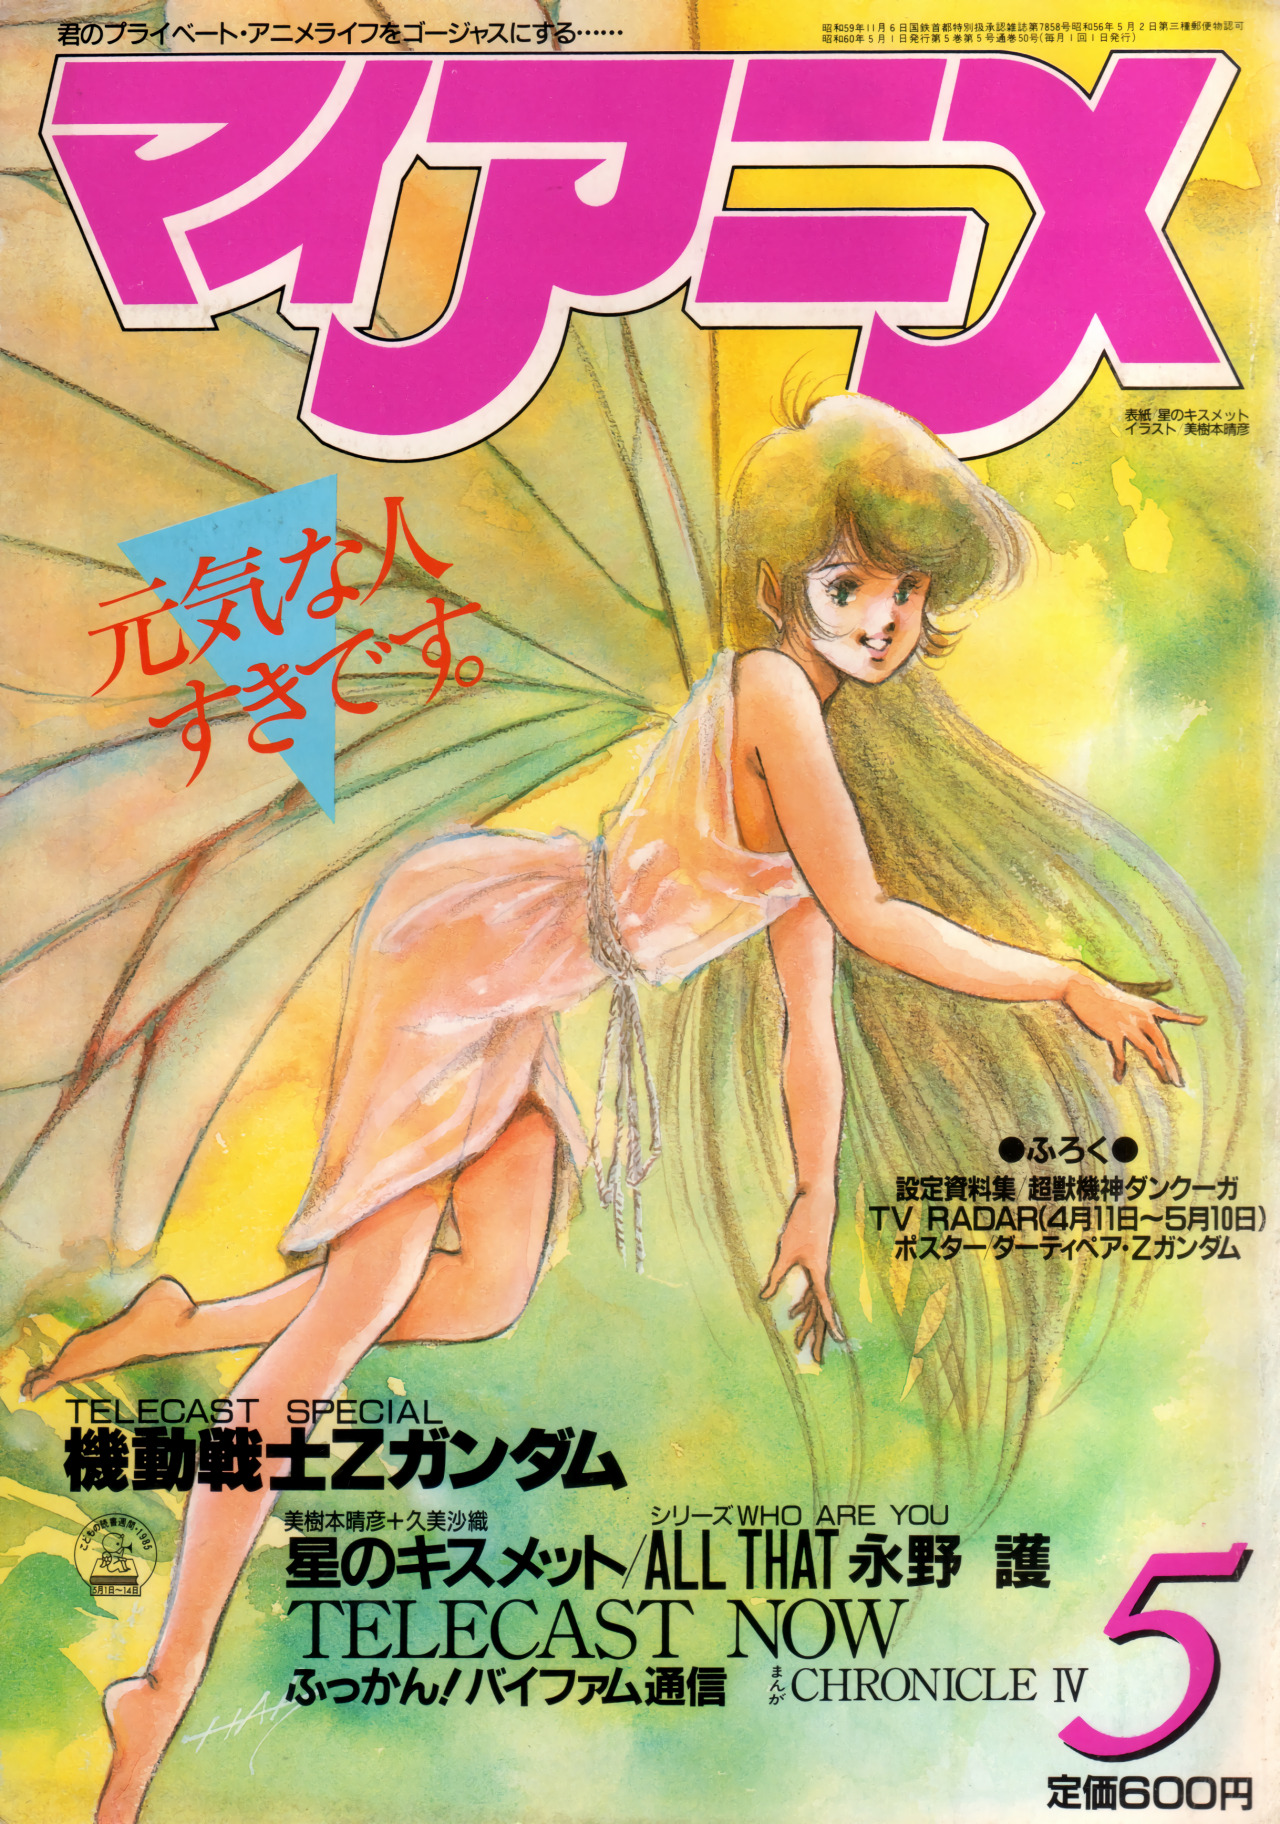 animarchive:    My Anime (05/1985) - original illustration by Haruhiko Mikimoto.